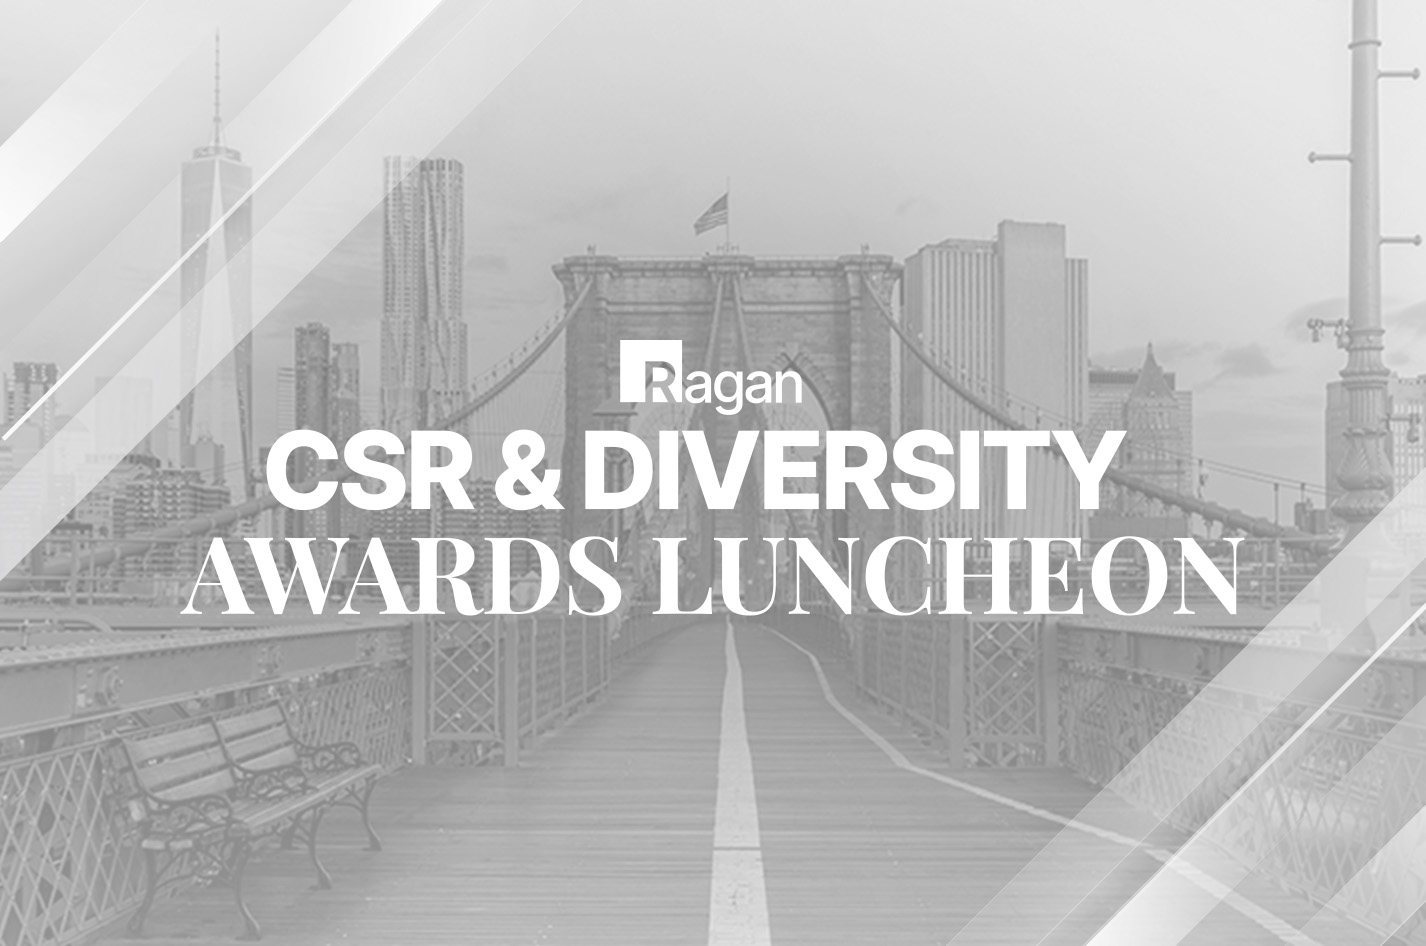 CSR & Diversity Awards Luncheon